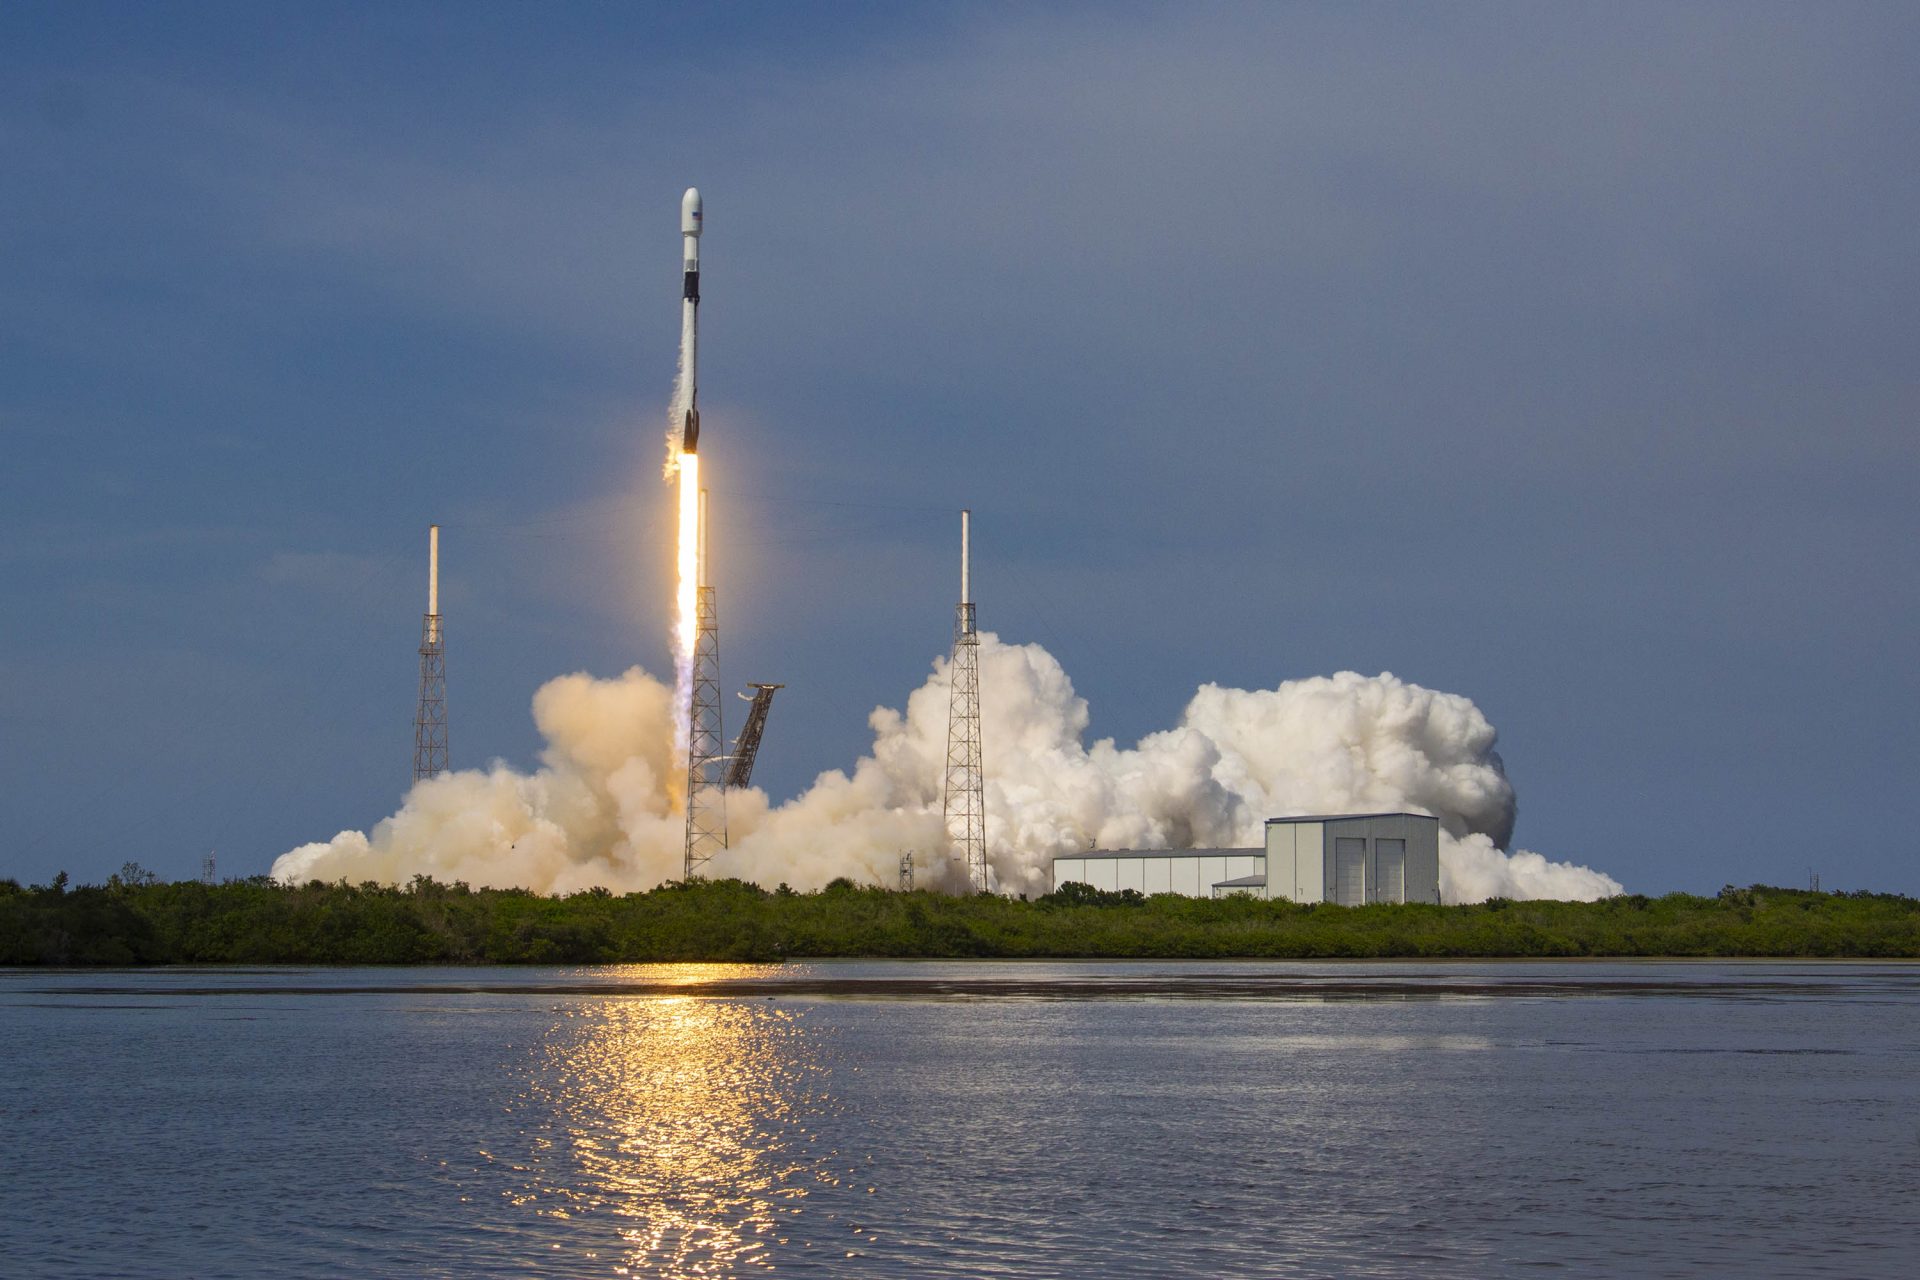 Falcon 9 lifting off